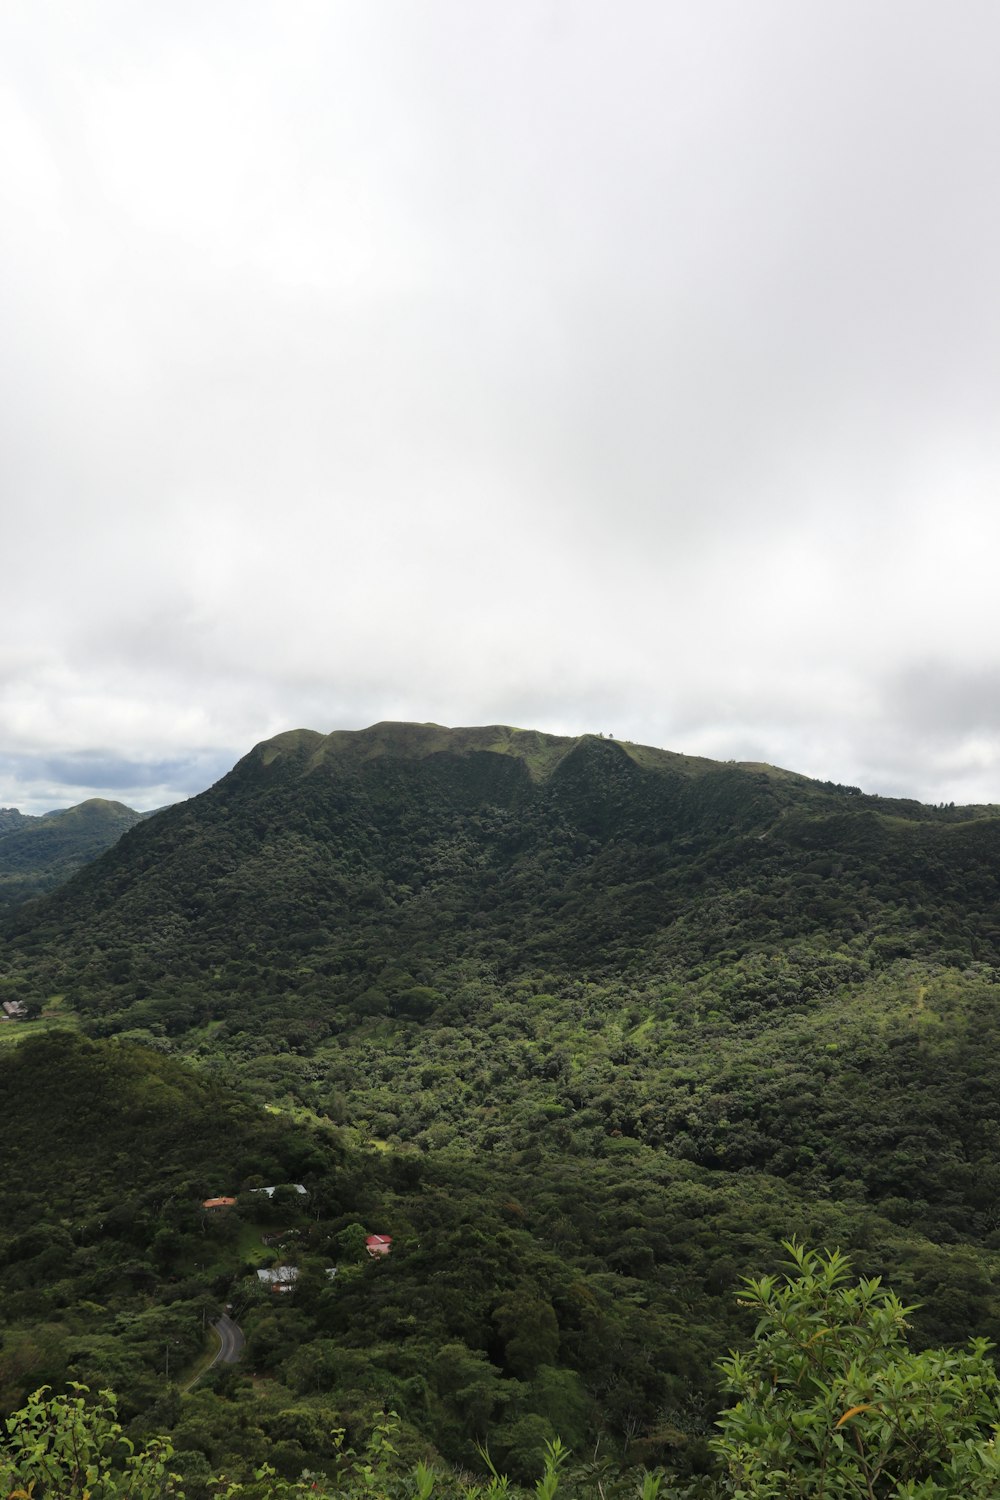 a view of a lush green mountain range